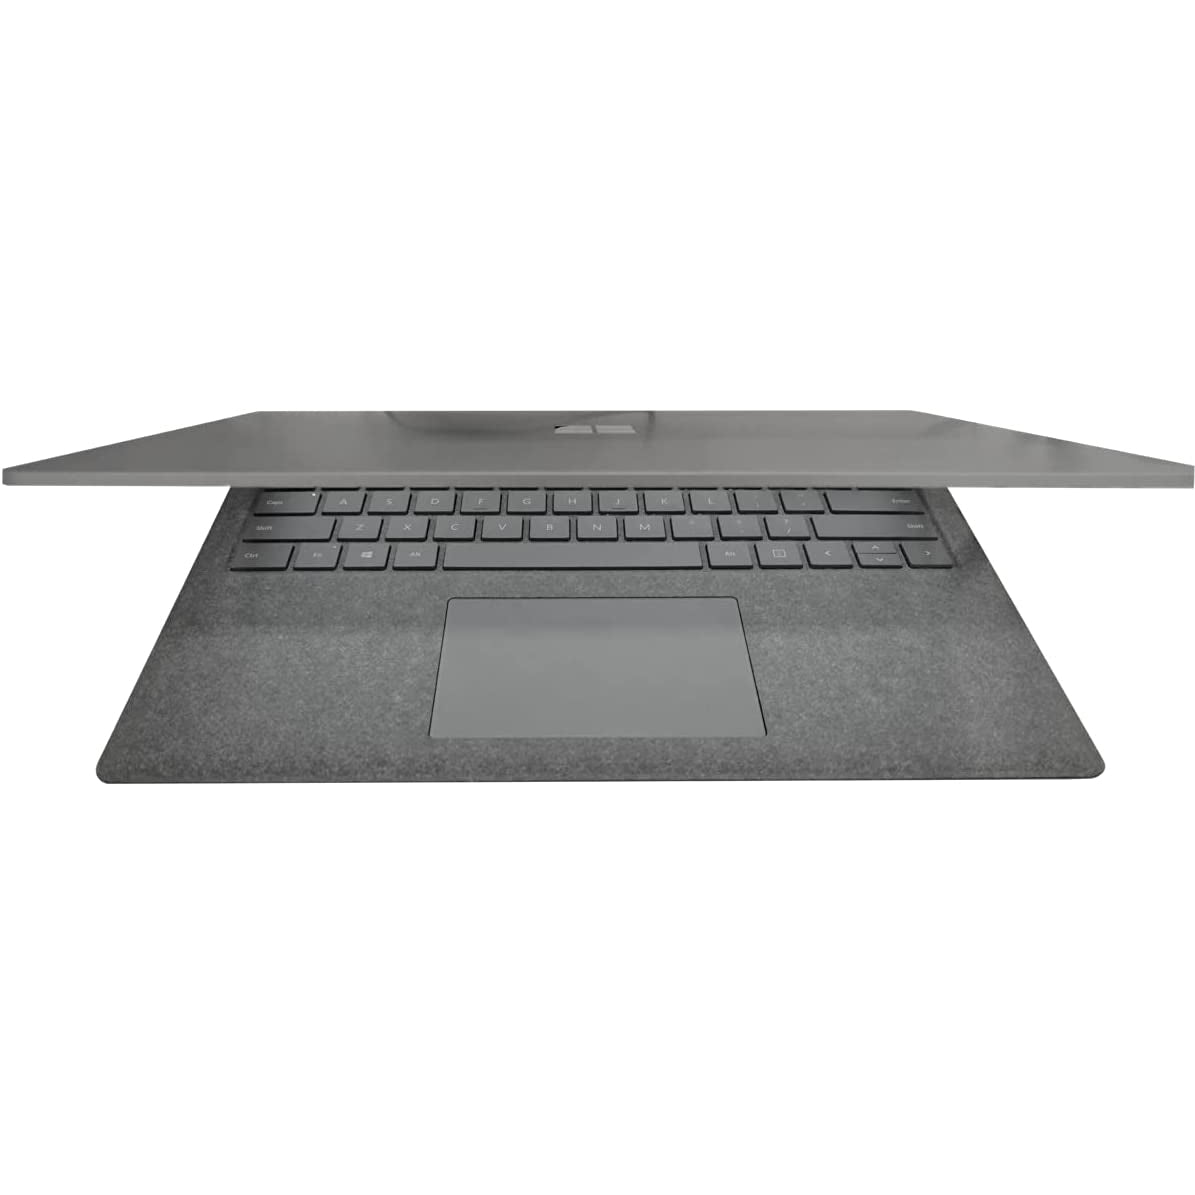 Microsoft Surface Laptop 1 I5-7200U 8GB 256GB W10 Pro (Model 1869) (Refurbished)